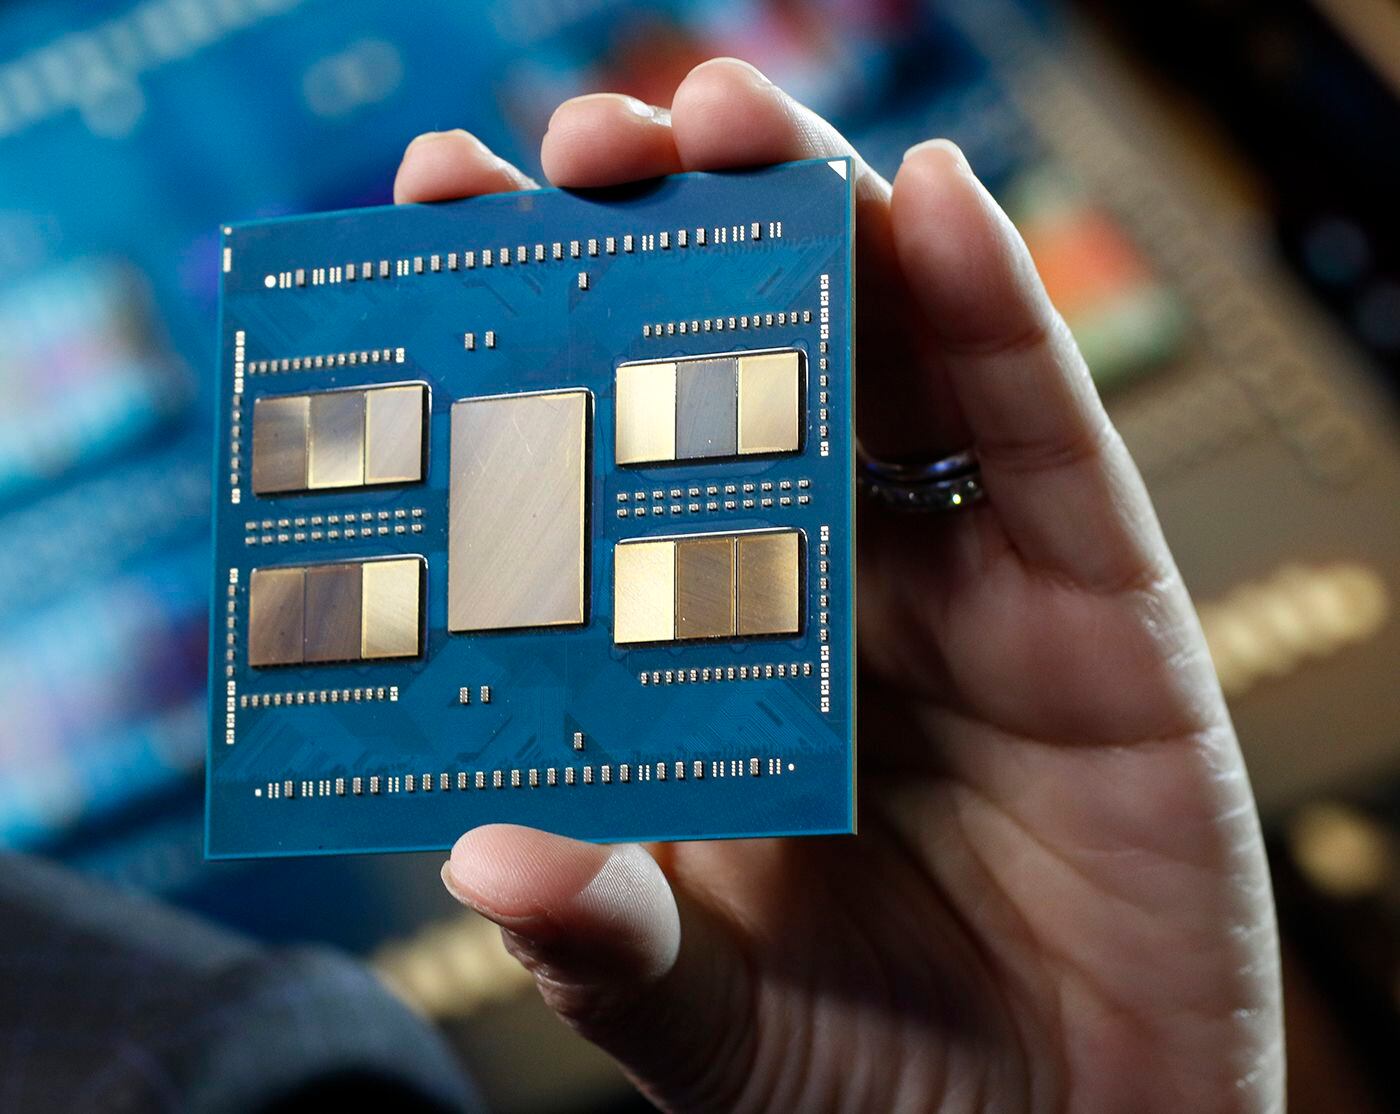 4th generation AMD EPYC processor introduced on November 10.